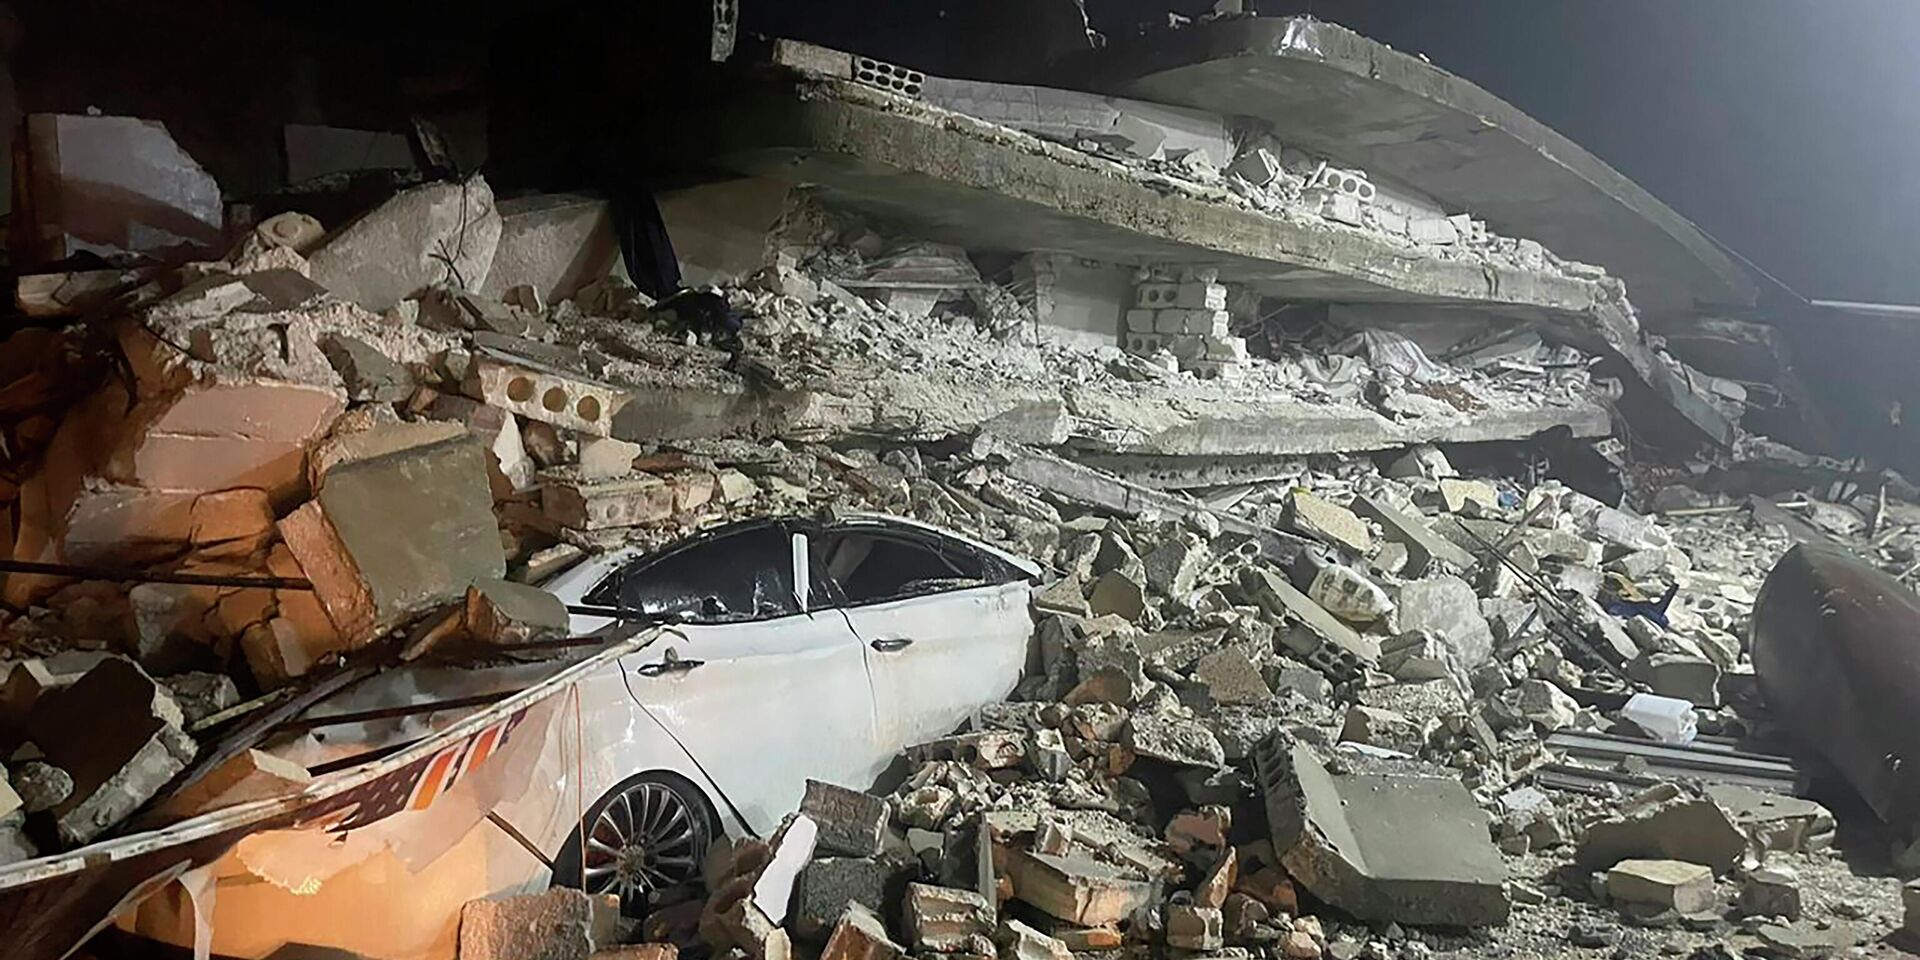 Последствия землетрясения в городе Азмарин, провинция Идлиб, Сирия. 6 февраля 2023 года - ИноСМИ, 1920, 13.02.2023